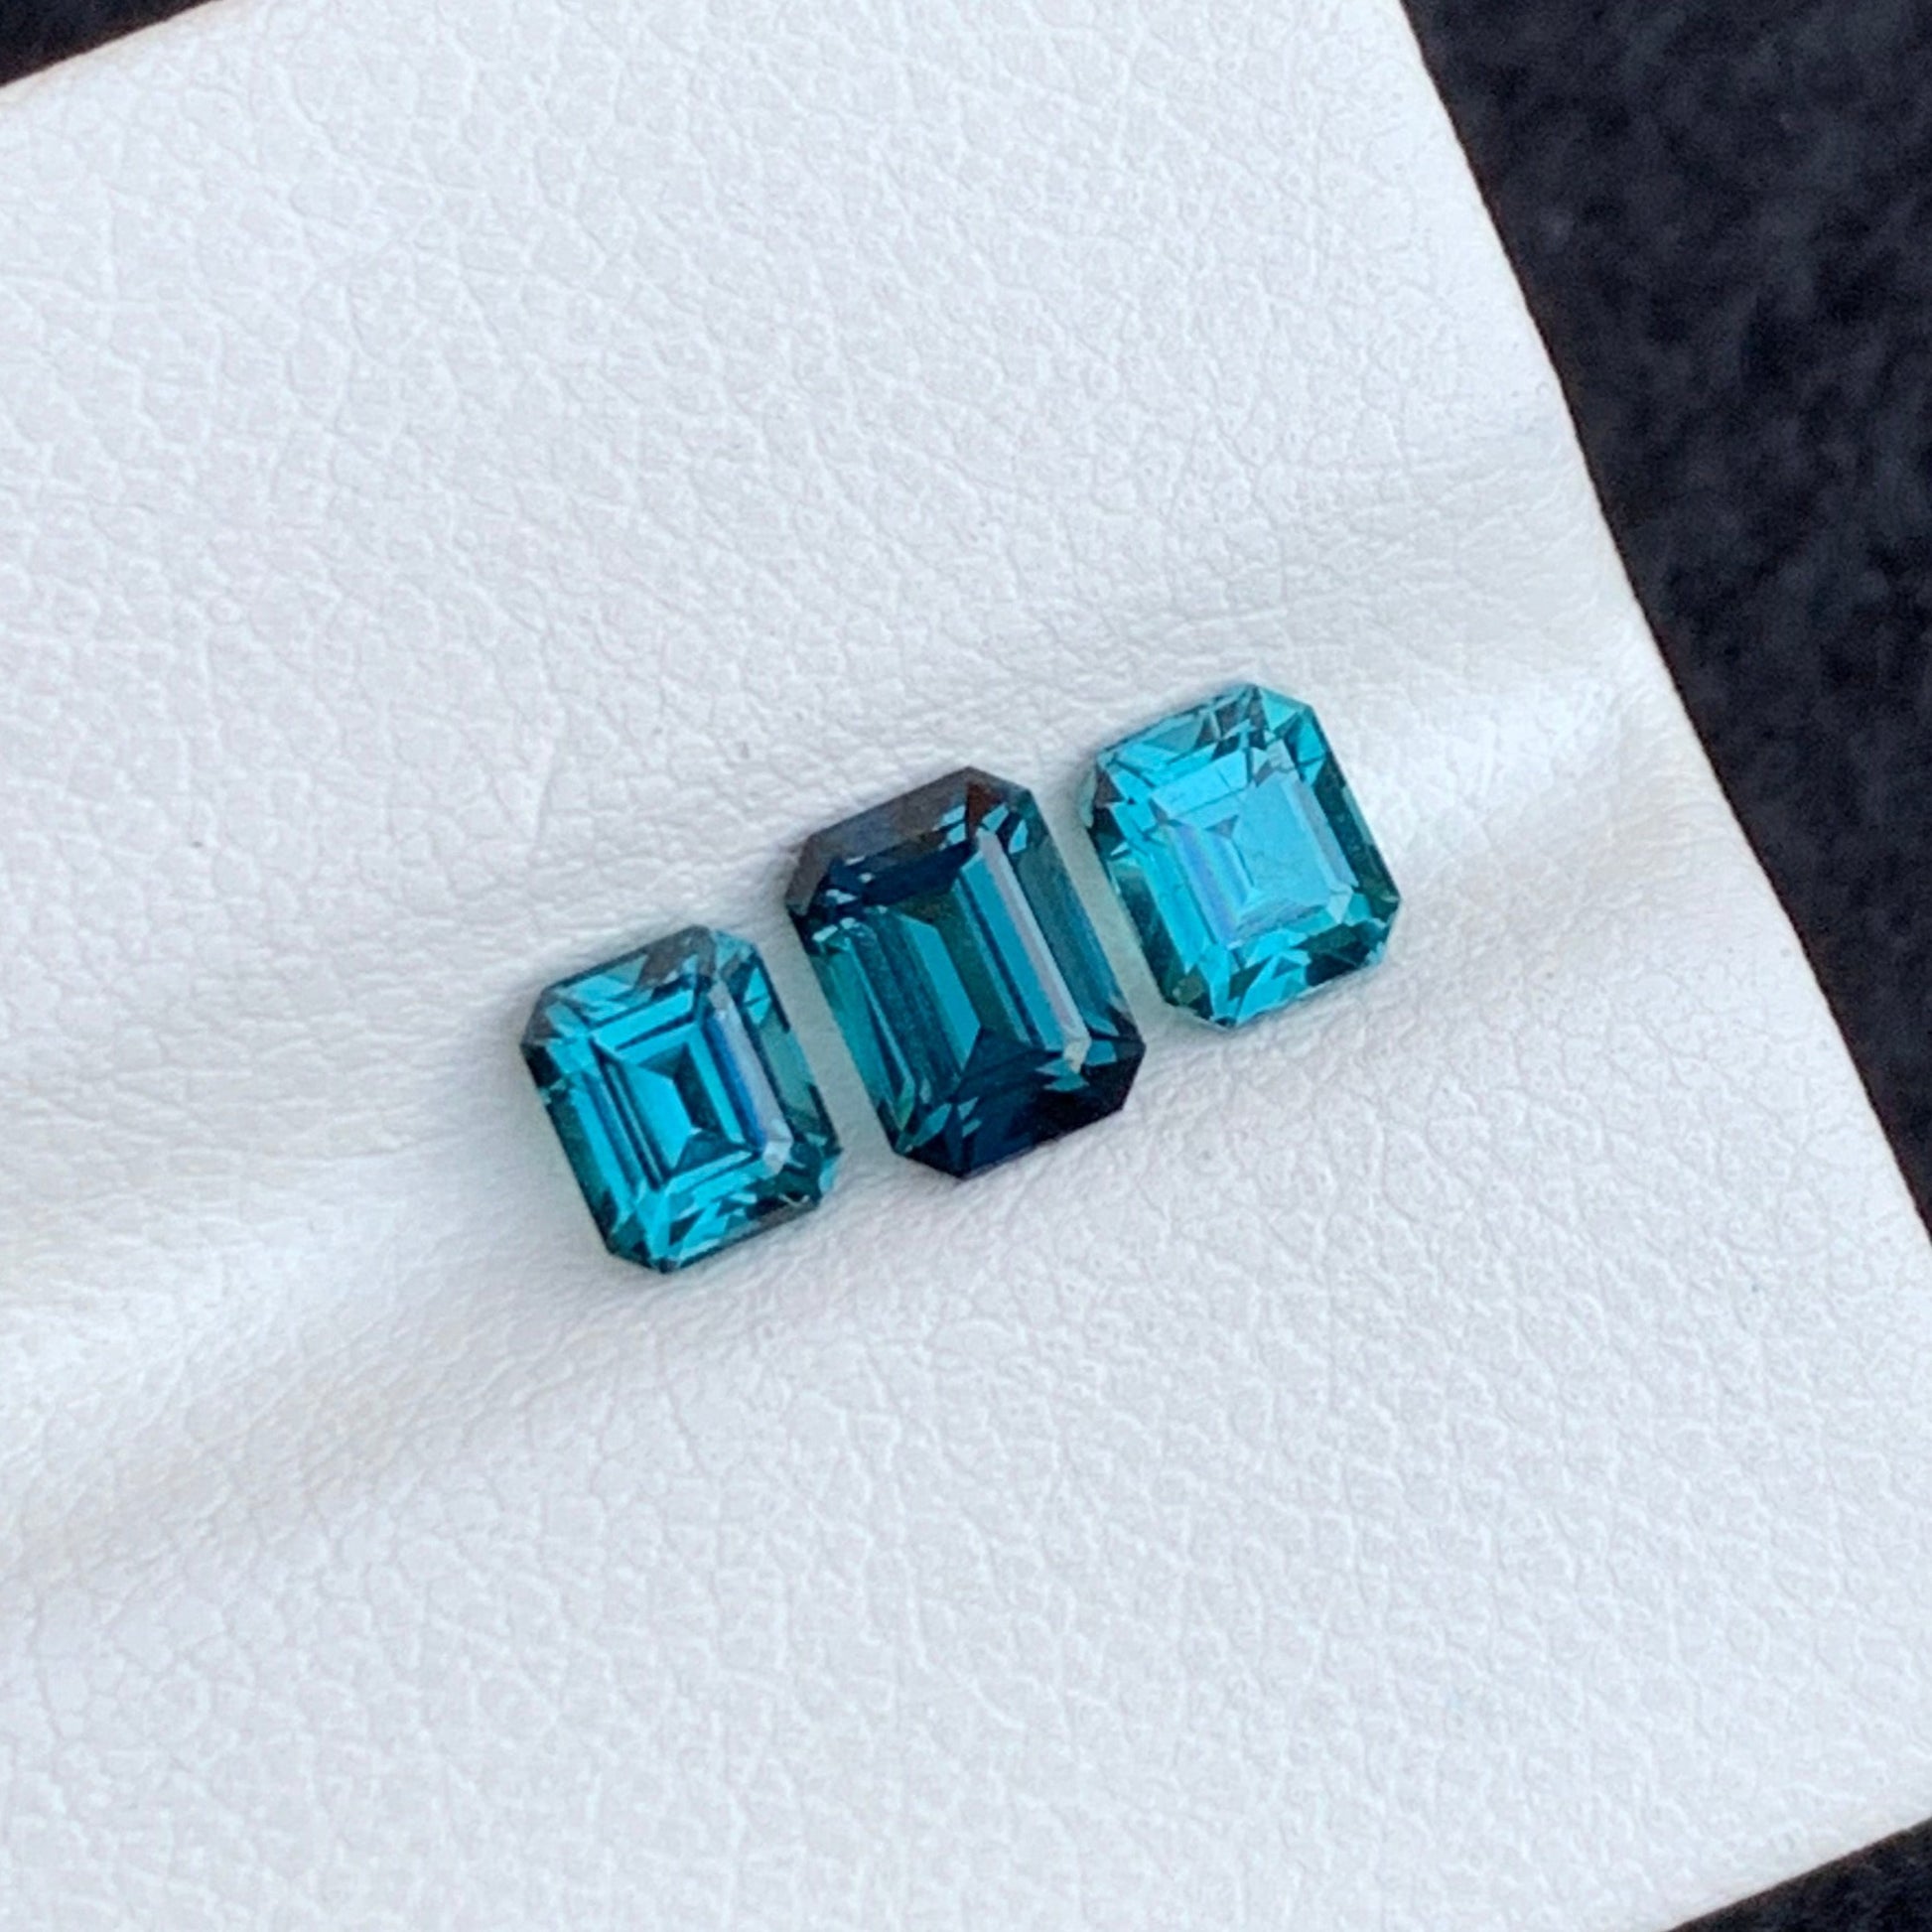 blue jewelry set